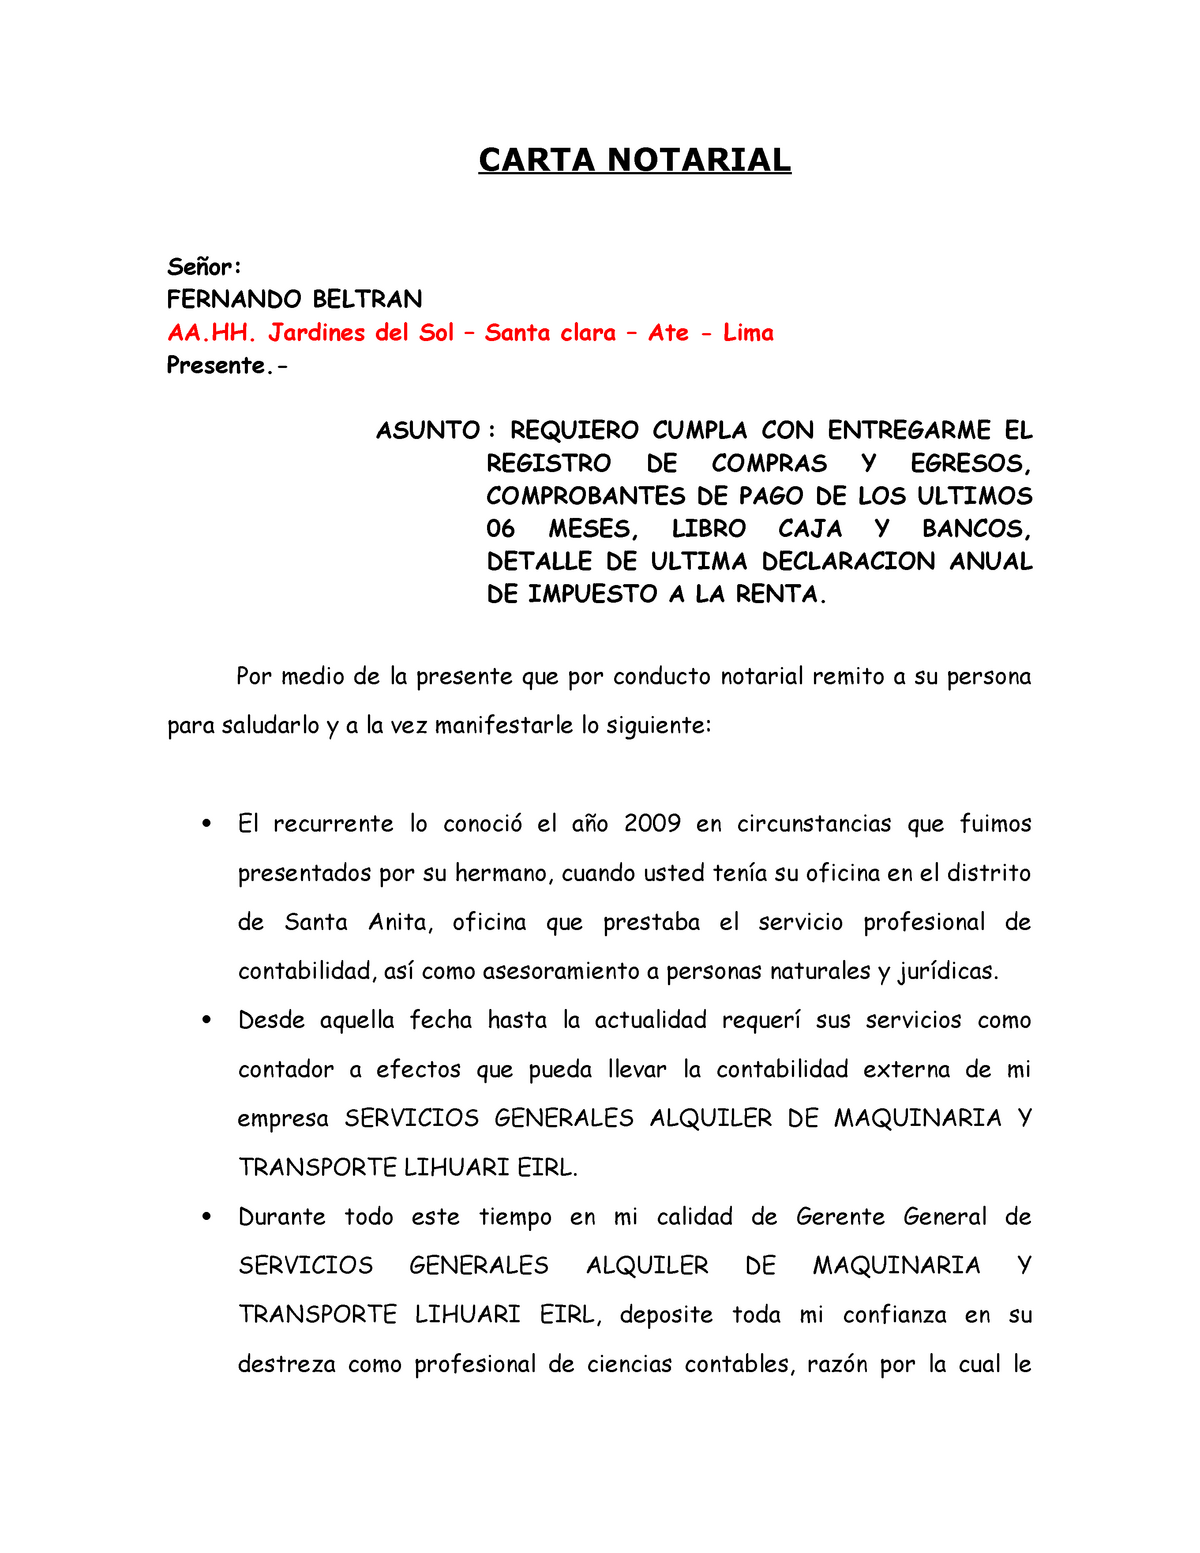 Carta Notarial A Contador SOLICITANDOLE CUMPLA CON PROPORCIONAR INFORMACION  - CARTA NOTARIAL Señor: - Studocu